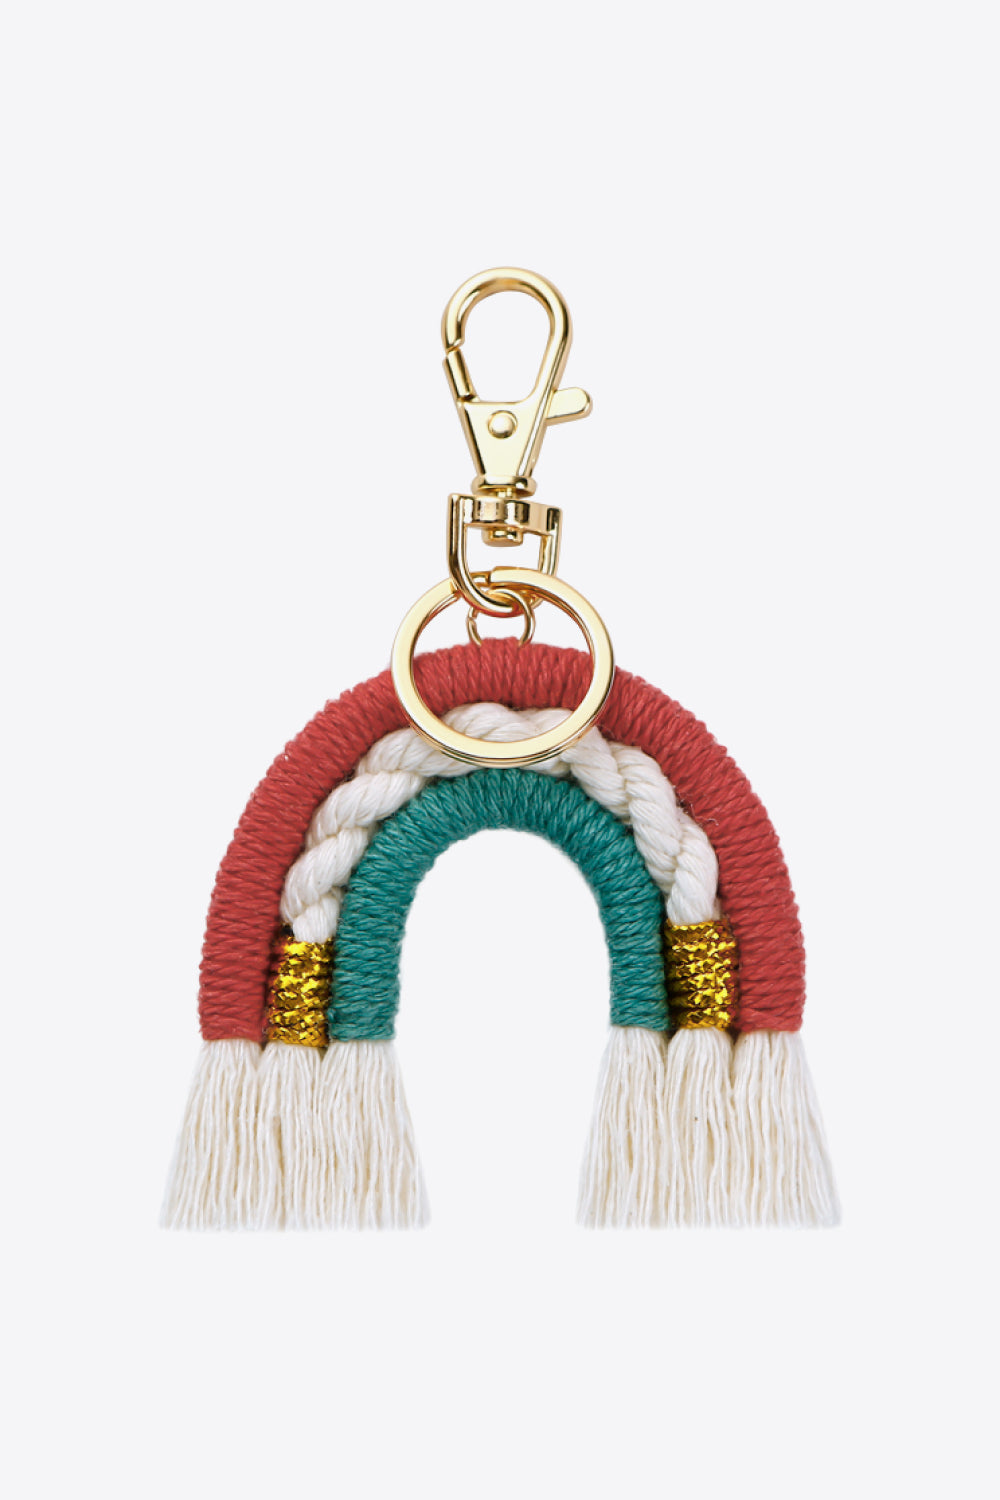 Trendsi Cupid Beauty Supplies Keychains 4-Pack Rainbow Tassel Key Chain, Color Varies